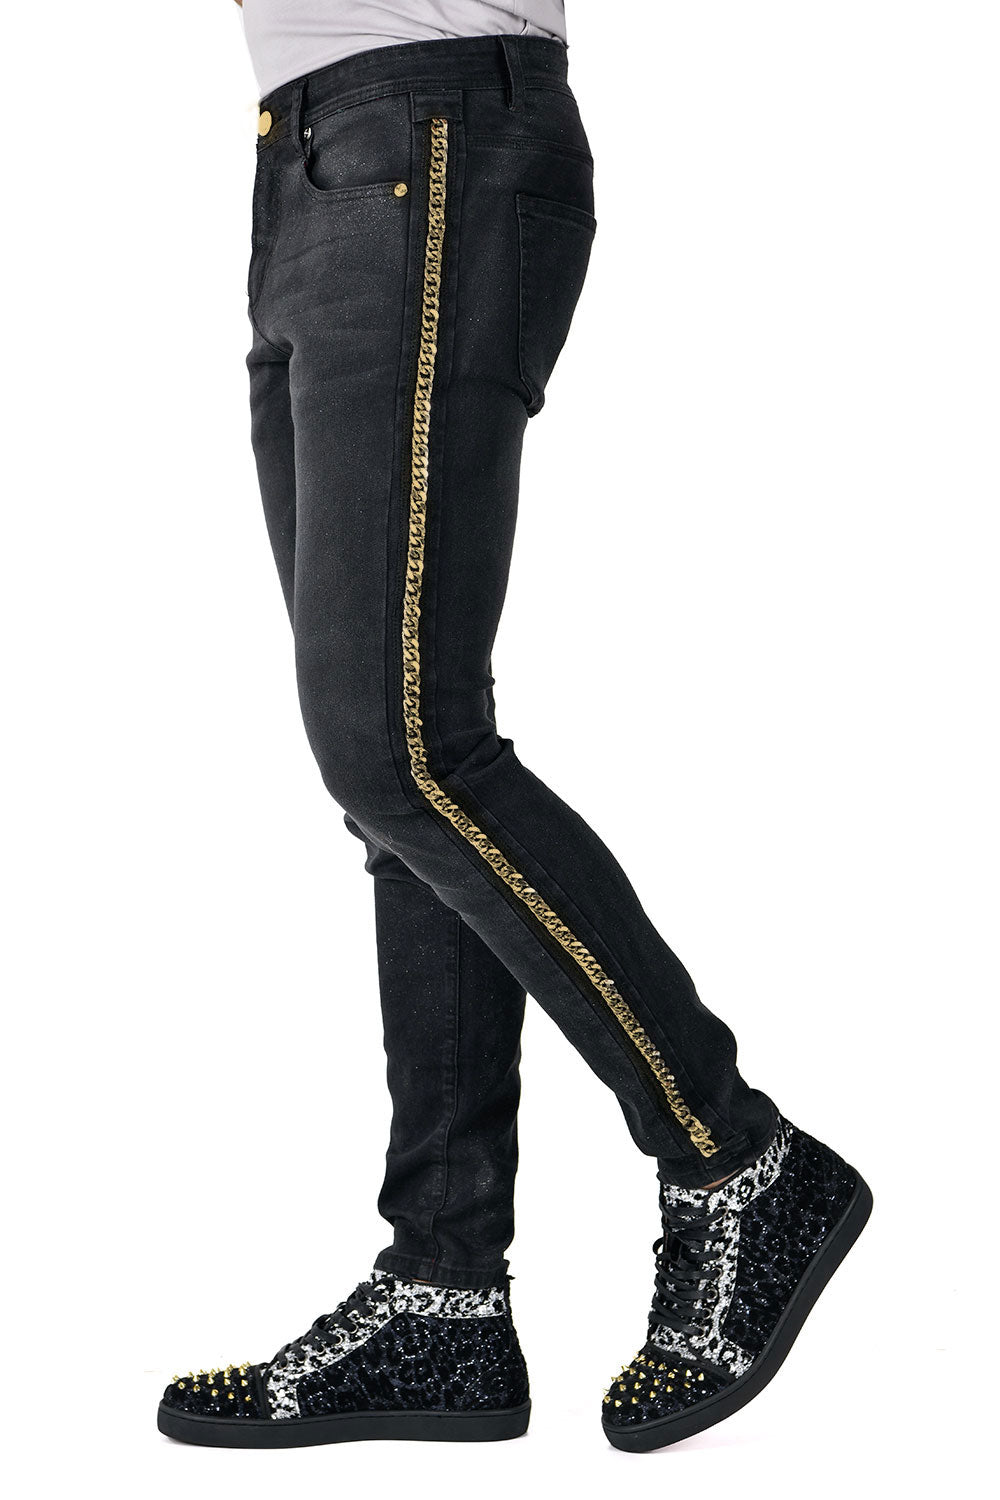 BARABAS Men's Sparkly Glittery Chain Design Denim Jeans SN8855 Black Gold